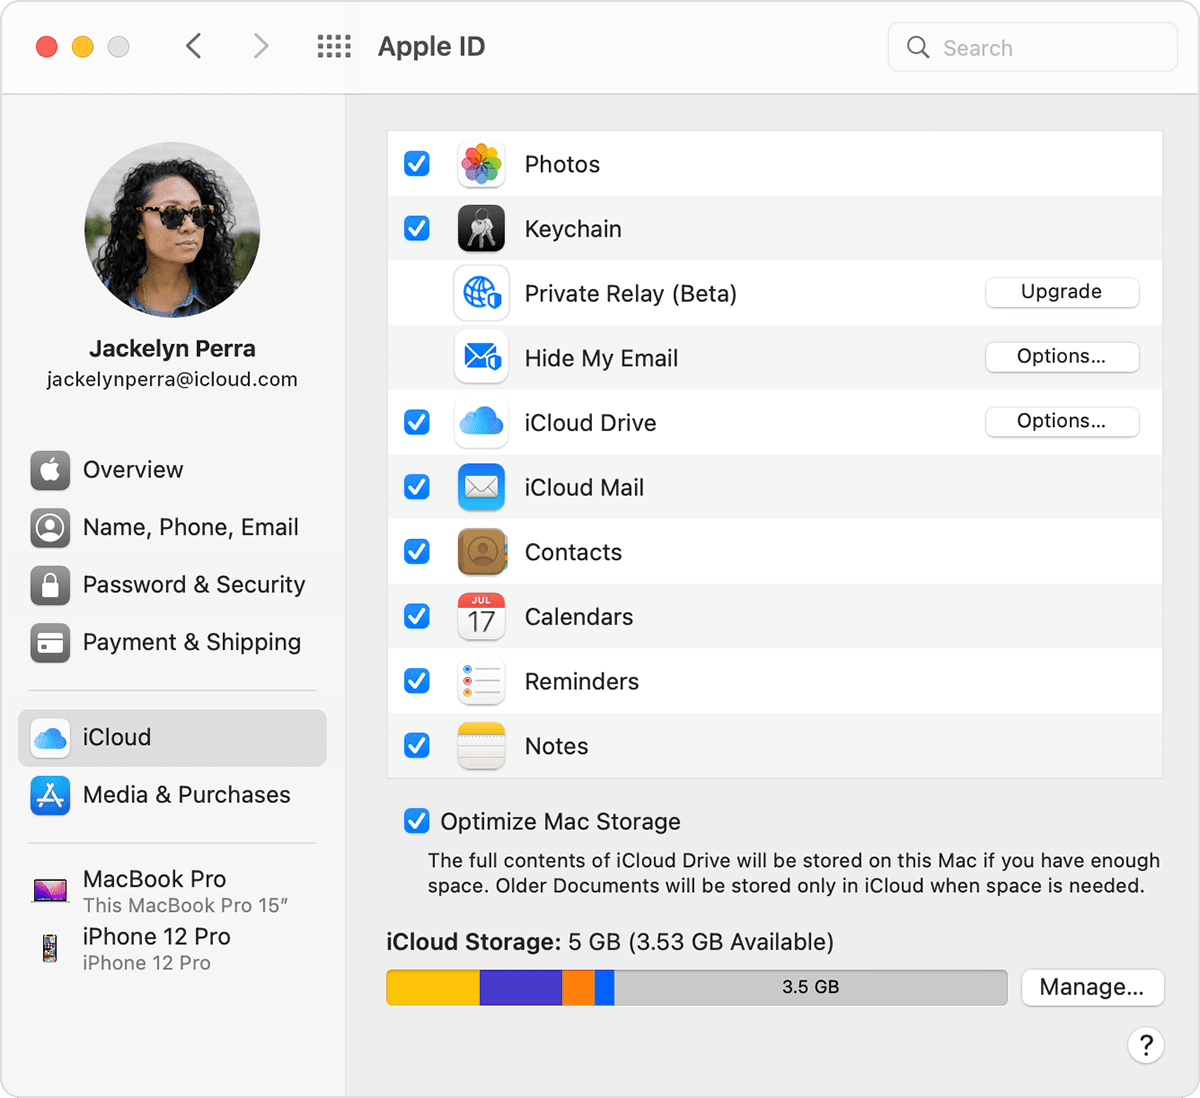 Your iCloud storage on Mac